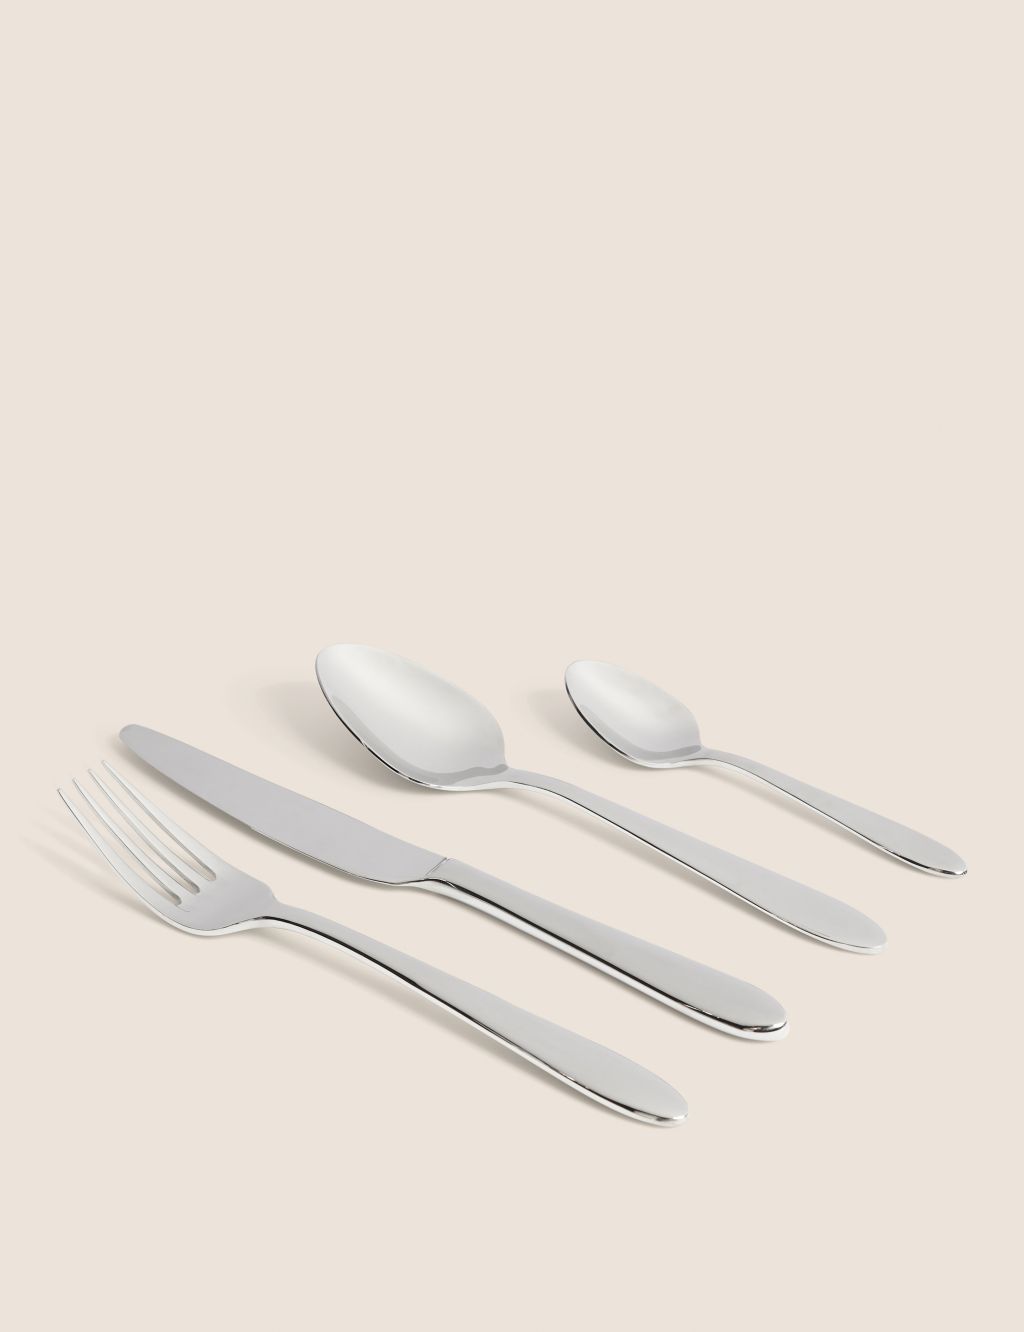 24 Piece Maxim Cutlery Set